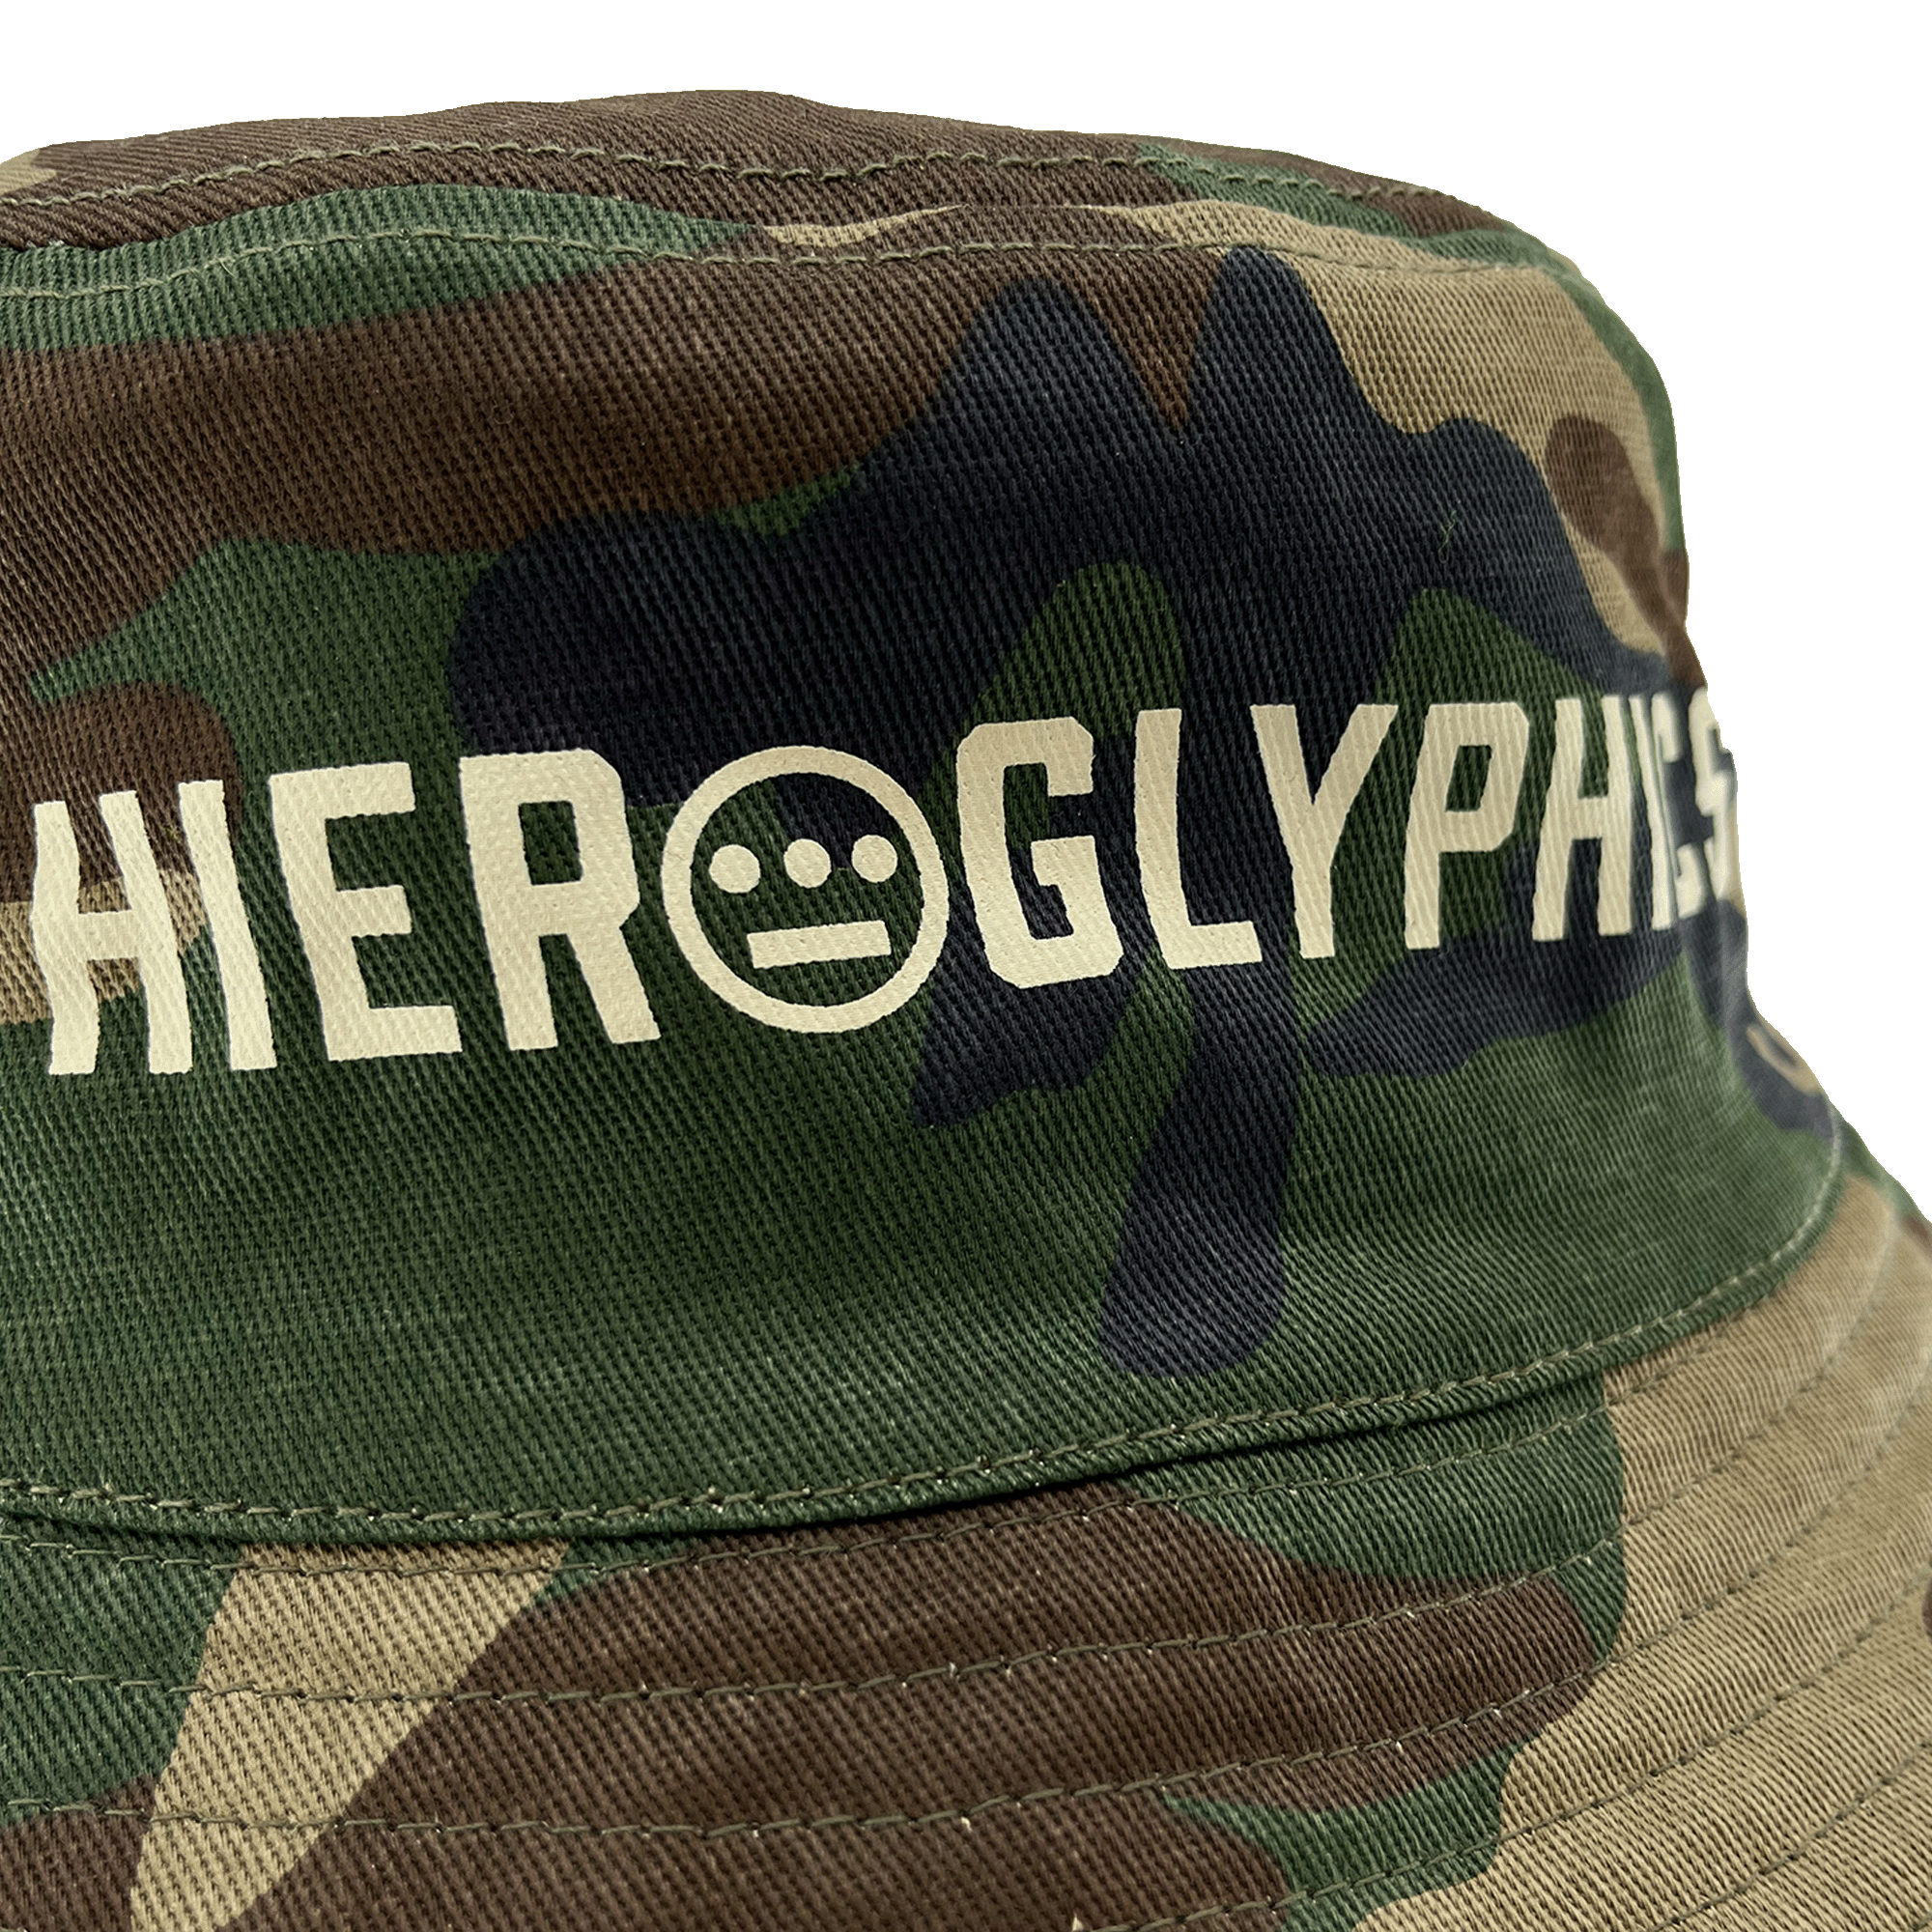 Close-up of Hieroglyphics Hip Hop Crew wordmark on the front crown of a Woodlands Camo bucket hat. 